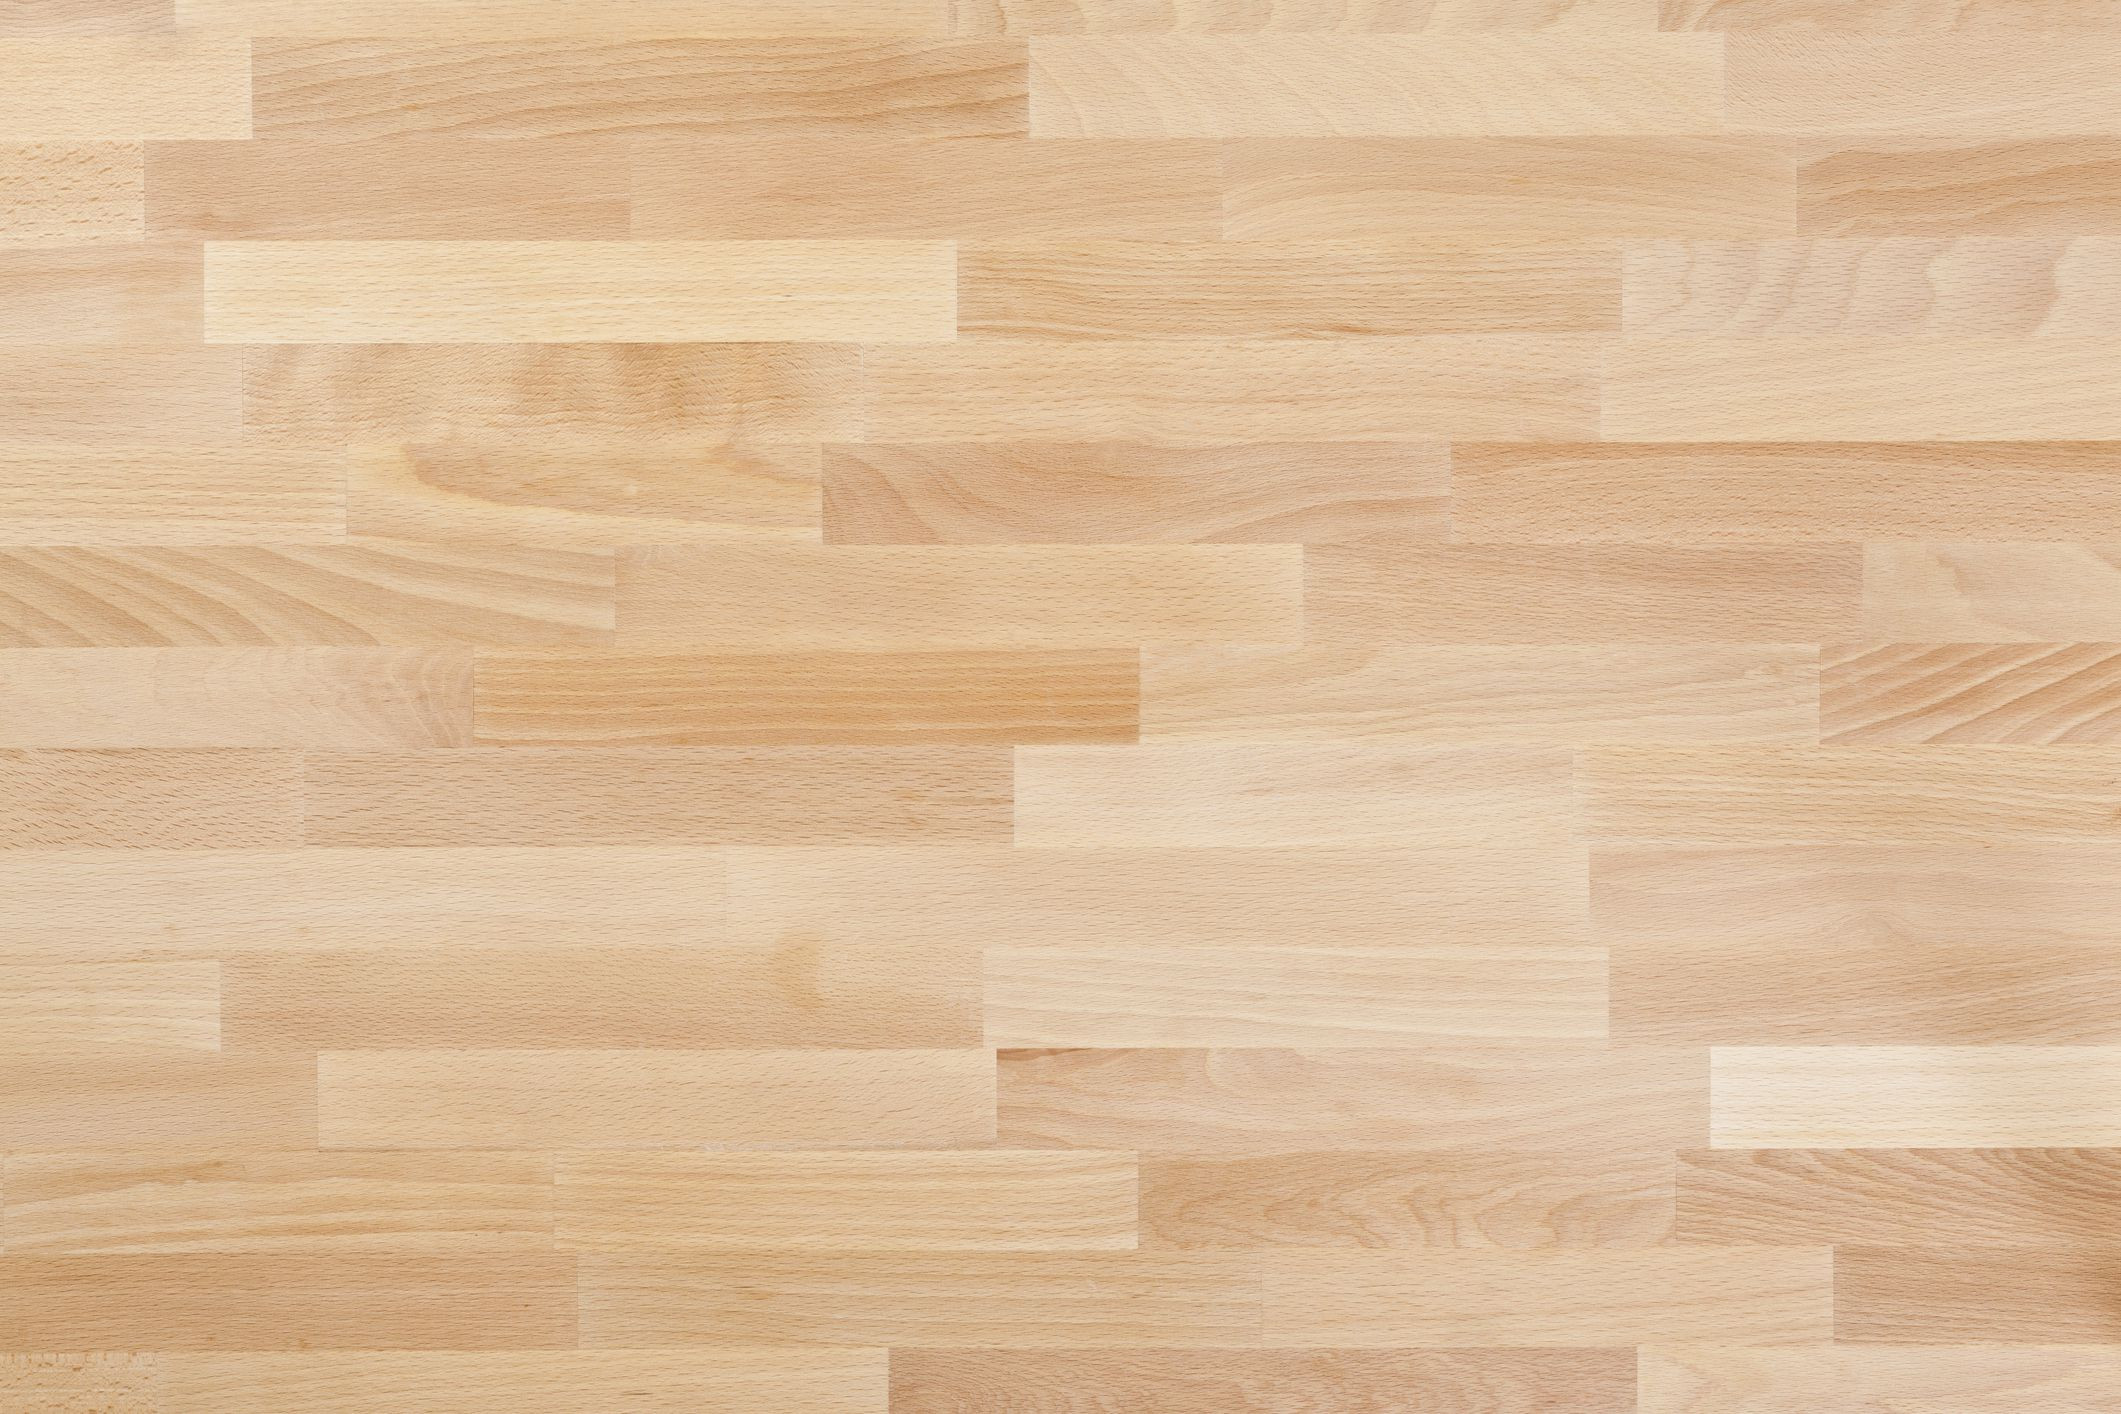 24 Ideal Hardwood Floor Protector Recliner 2024 free download hardwood floor protector recliner of does laminate flooring scratch easily throughout laminate flooring 185230326 58ff92175f9b581d595e760f